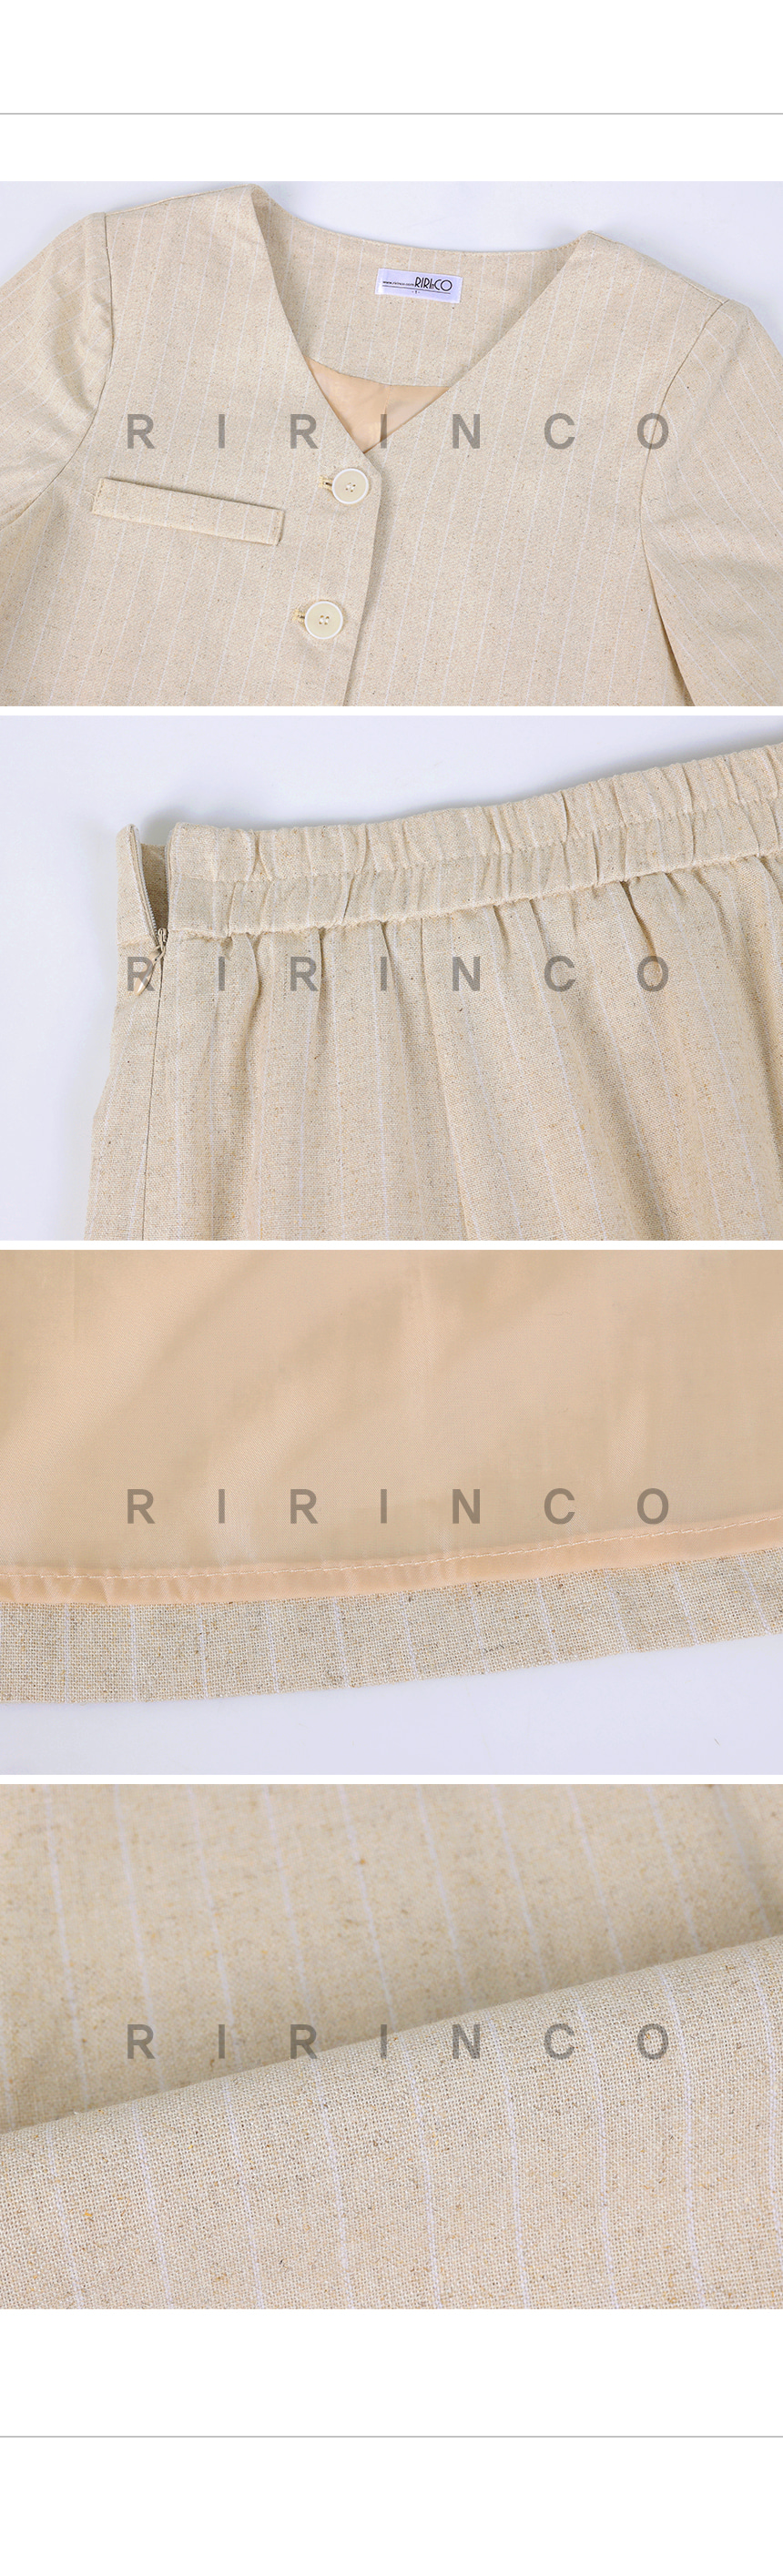 RIRINCO リネンストライプ半袖ジャケット&ロングスカート上下セット